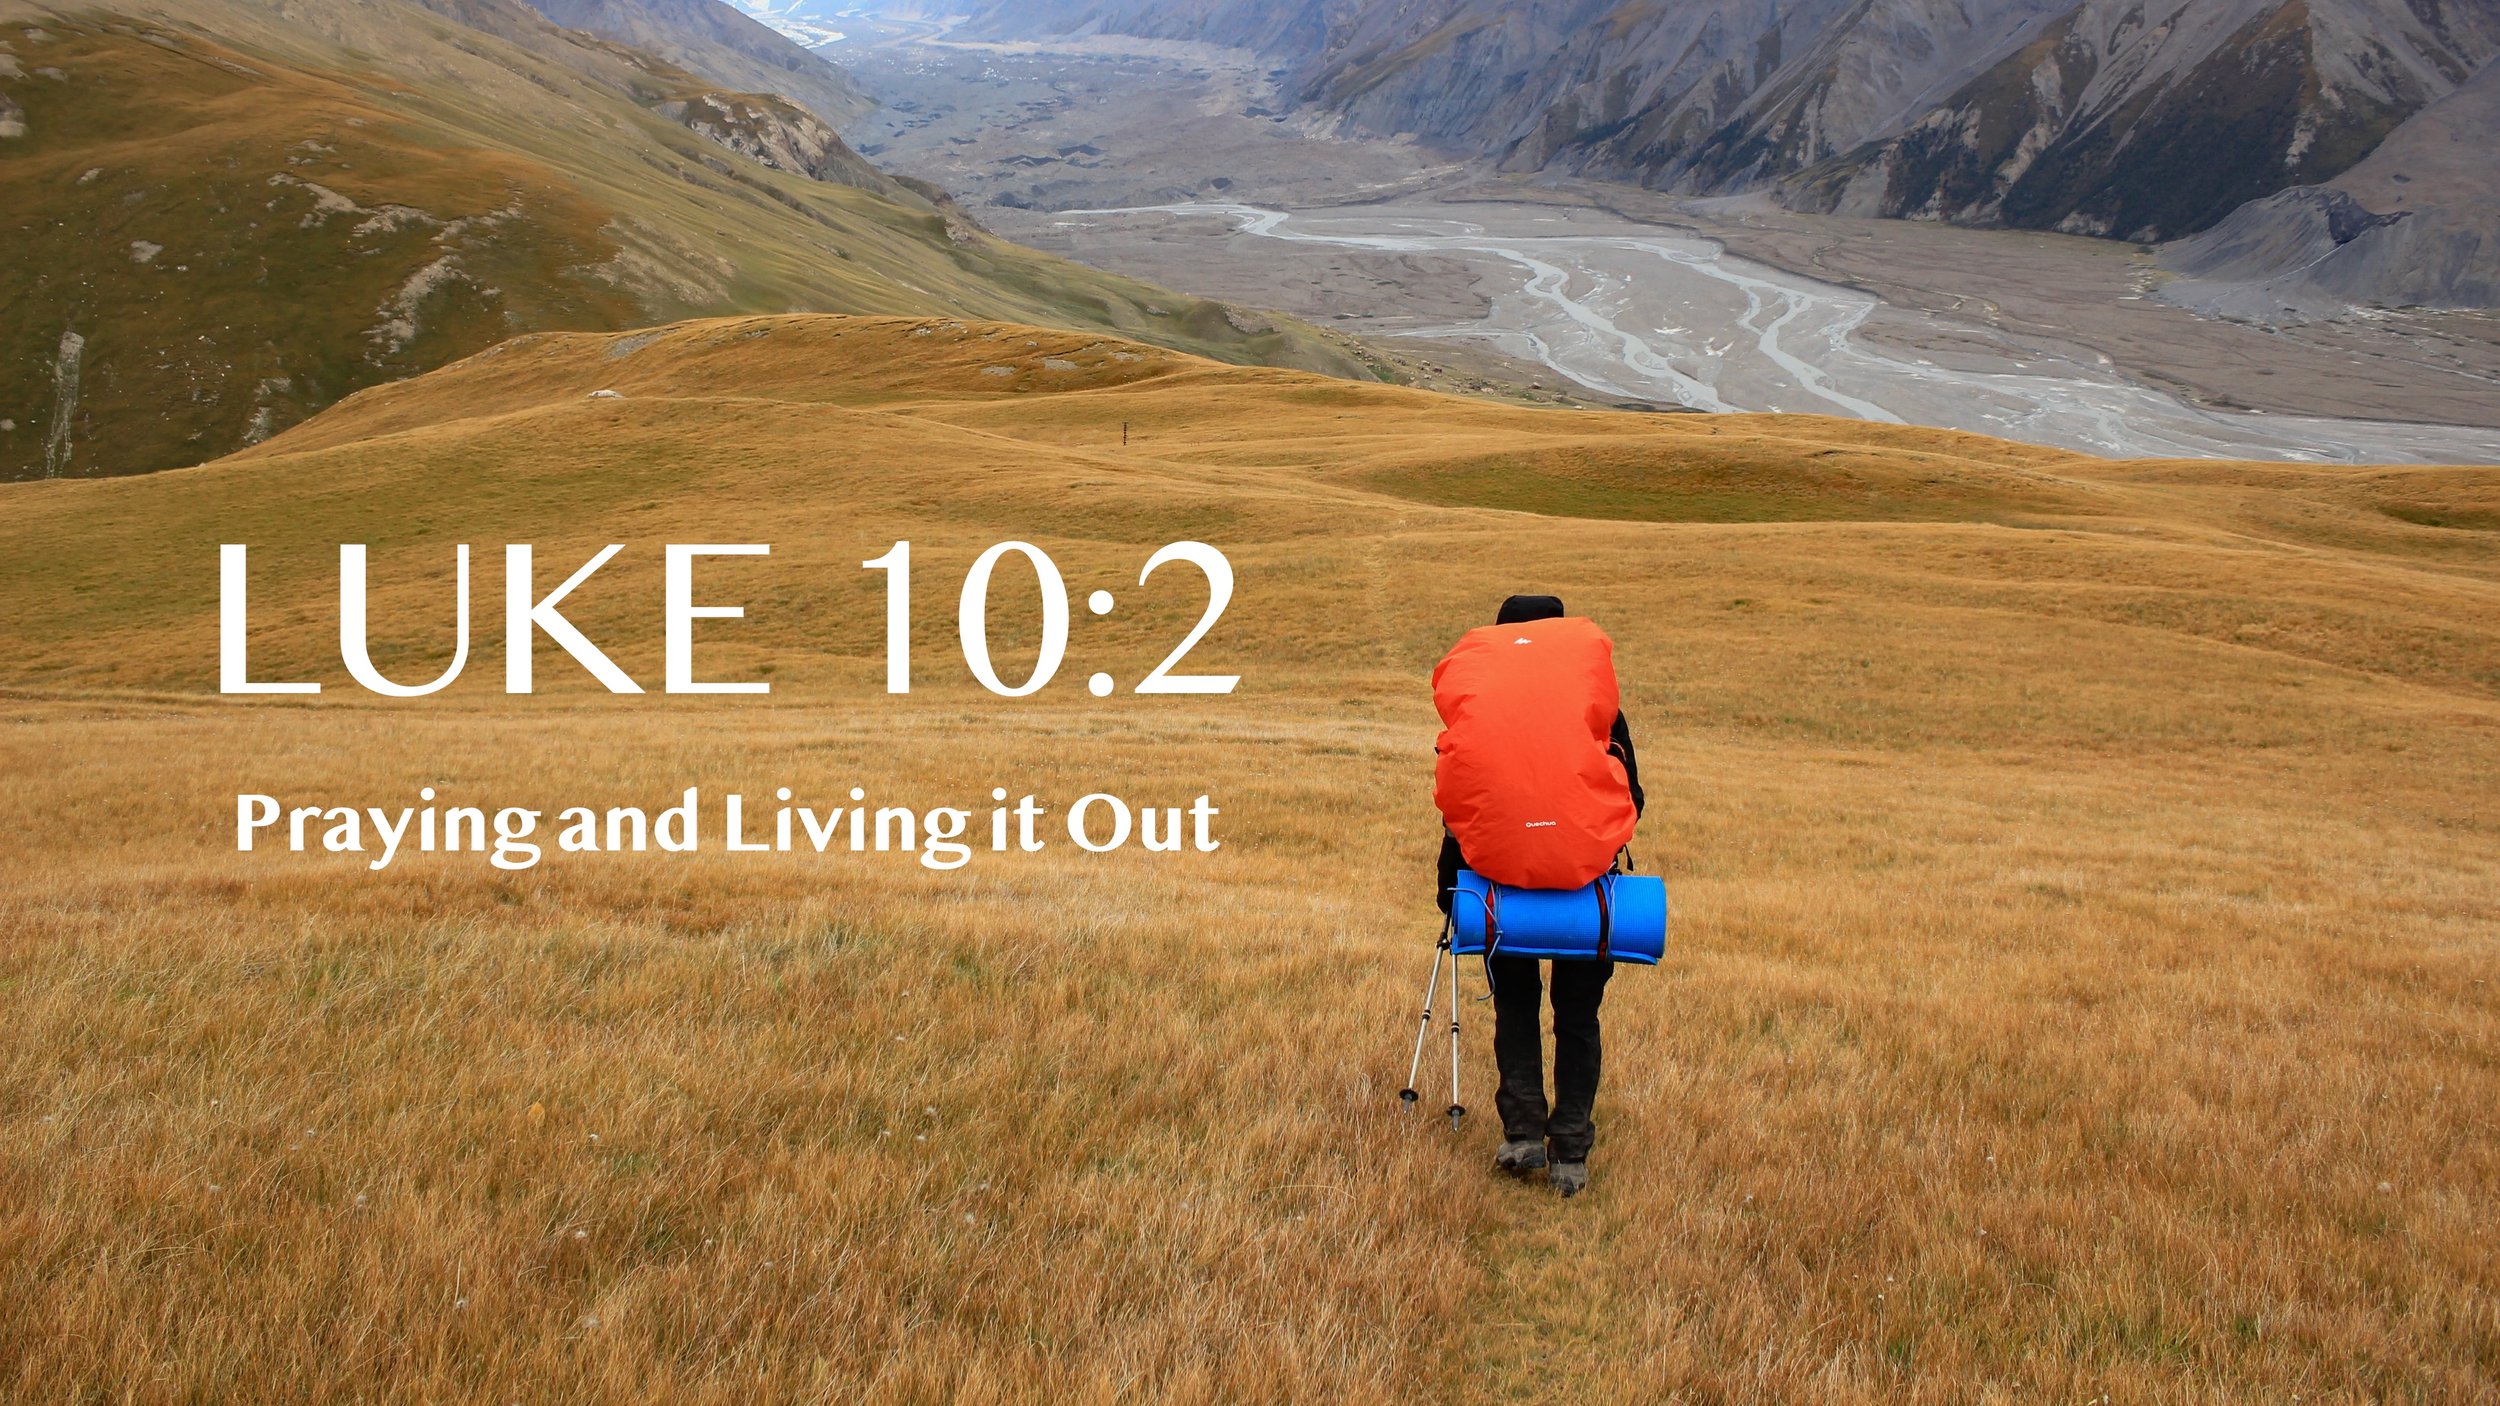 Luke 10:2 - Praying and Living it Out